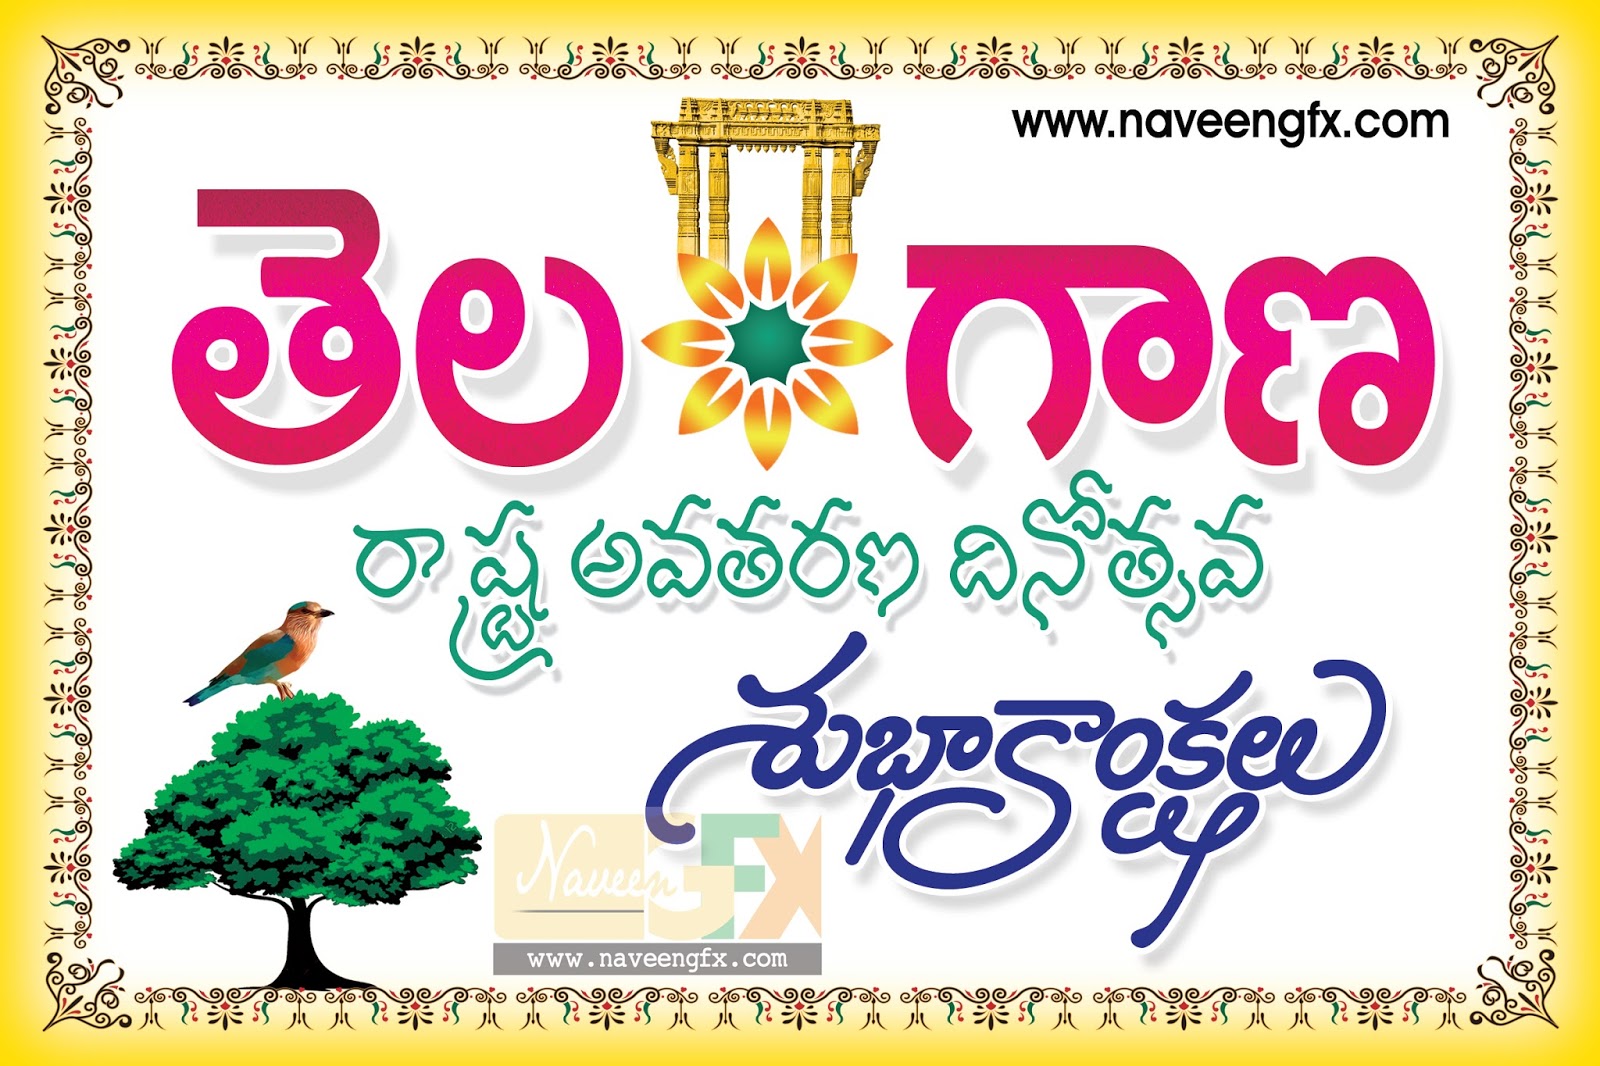 Telangana formation day Celebrations wallpaper | naveengfx